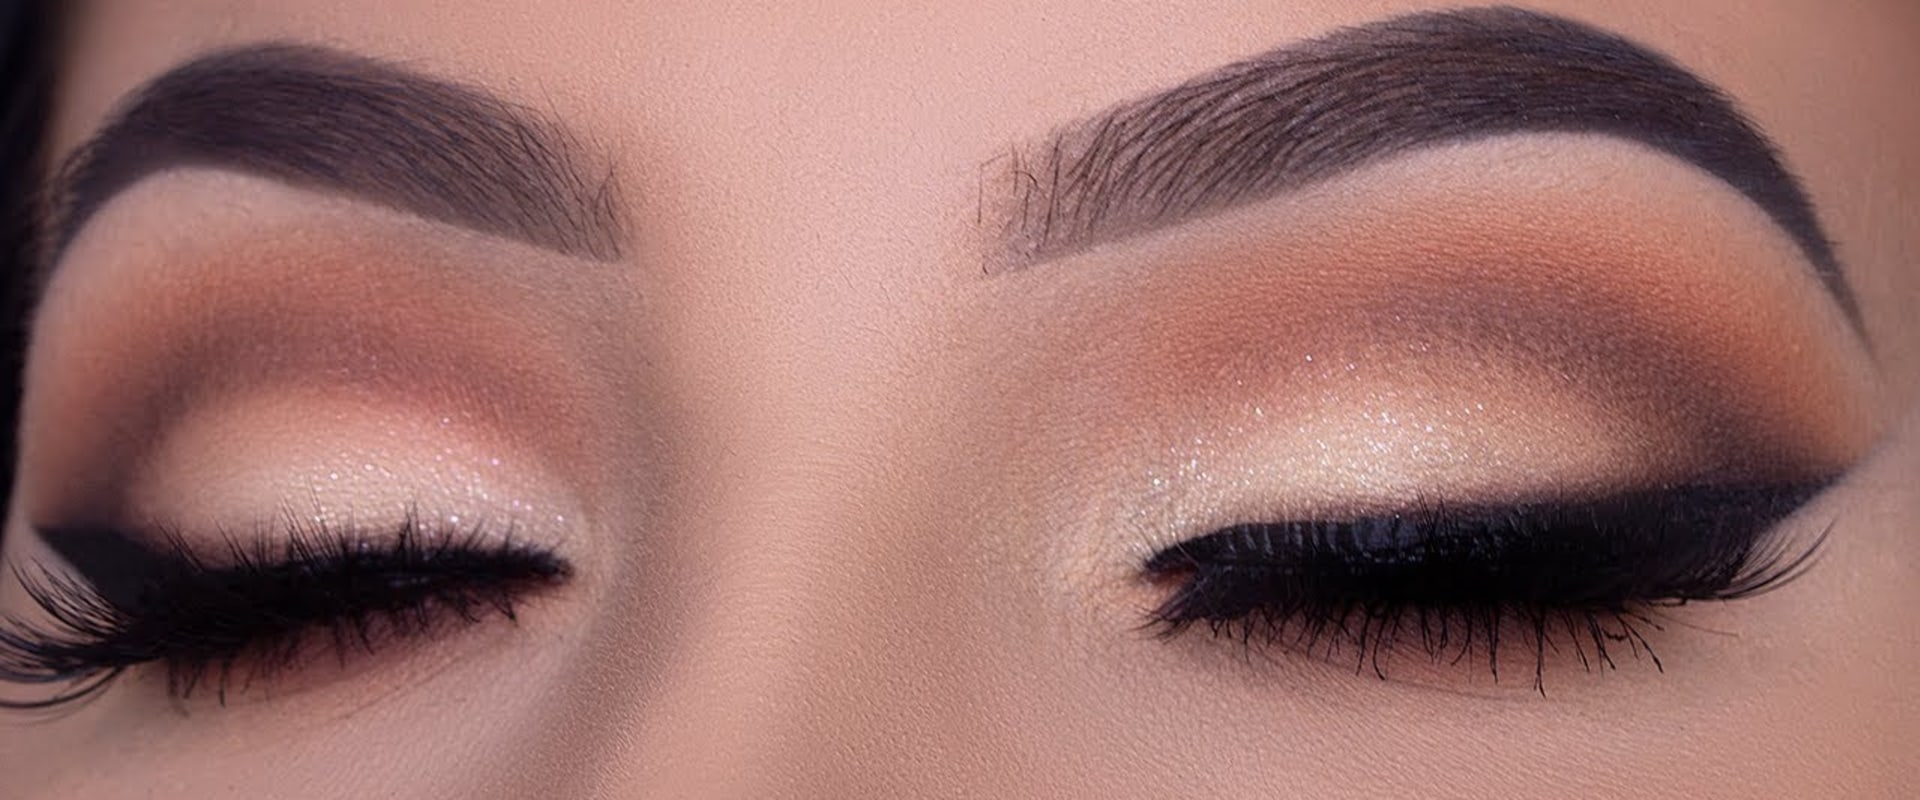 Eyeshadow and Eyeliner: The Perfect Bridal Makeup